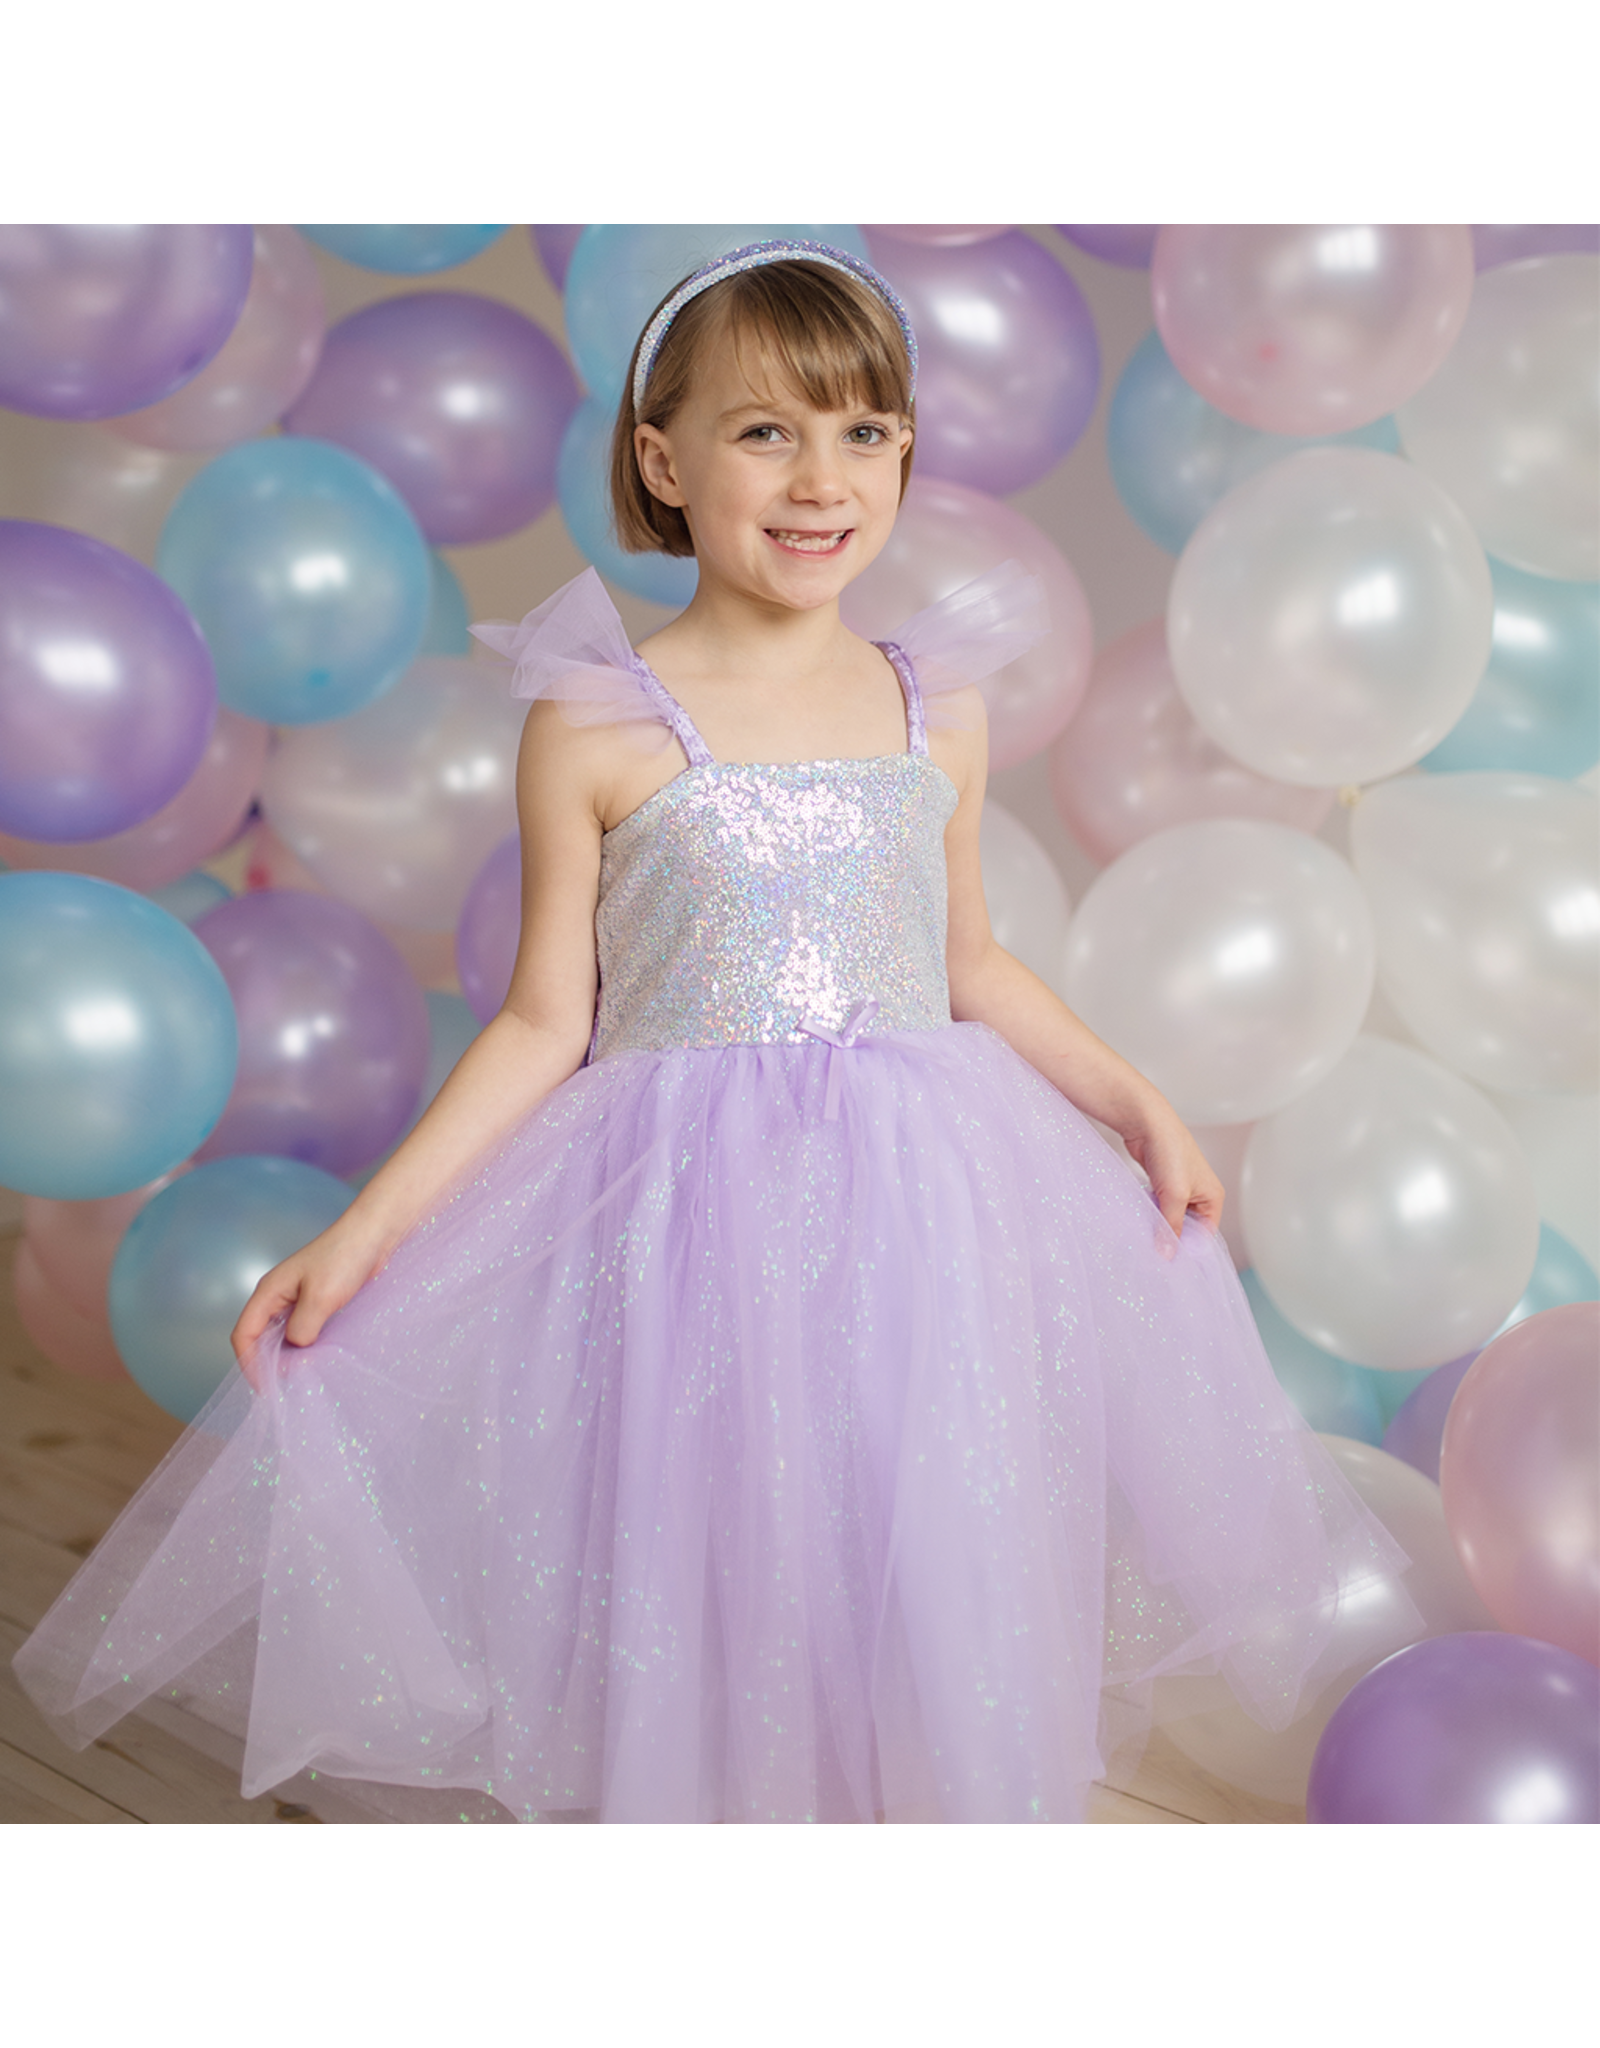 Great Pretenders Lilac Sequin Princess Dress, Size 5/6